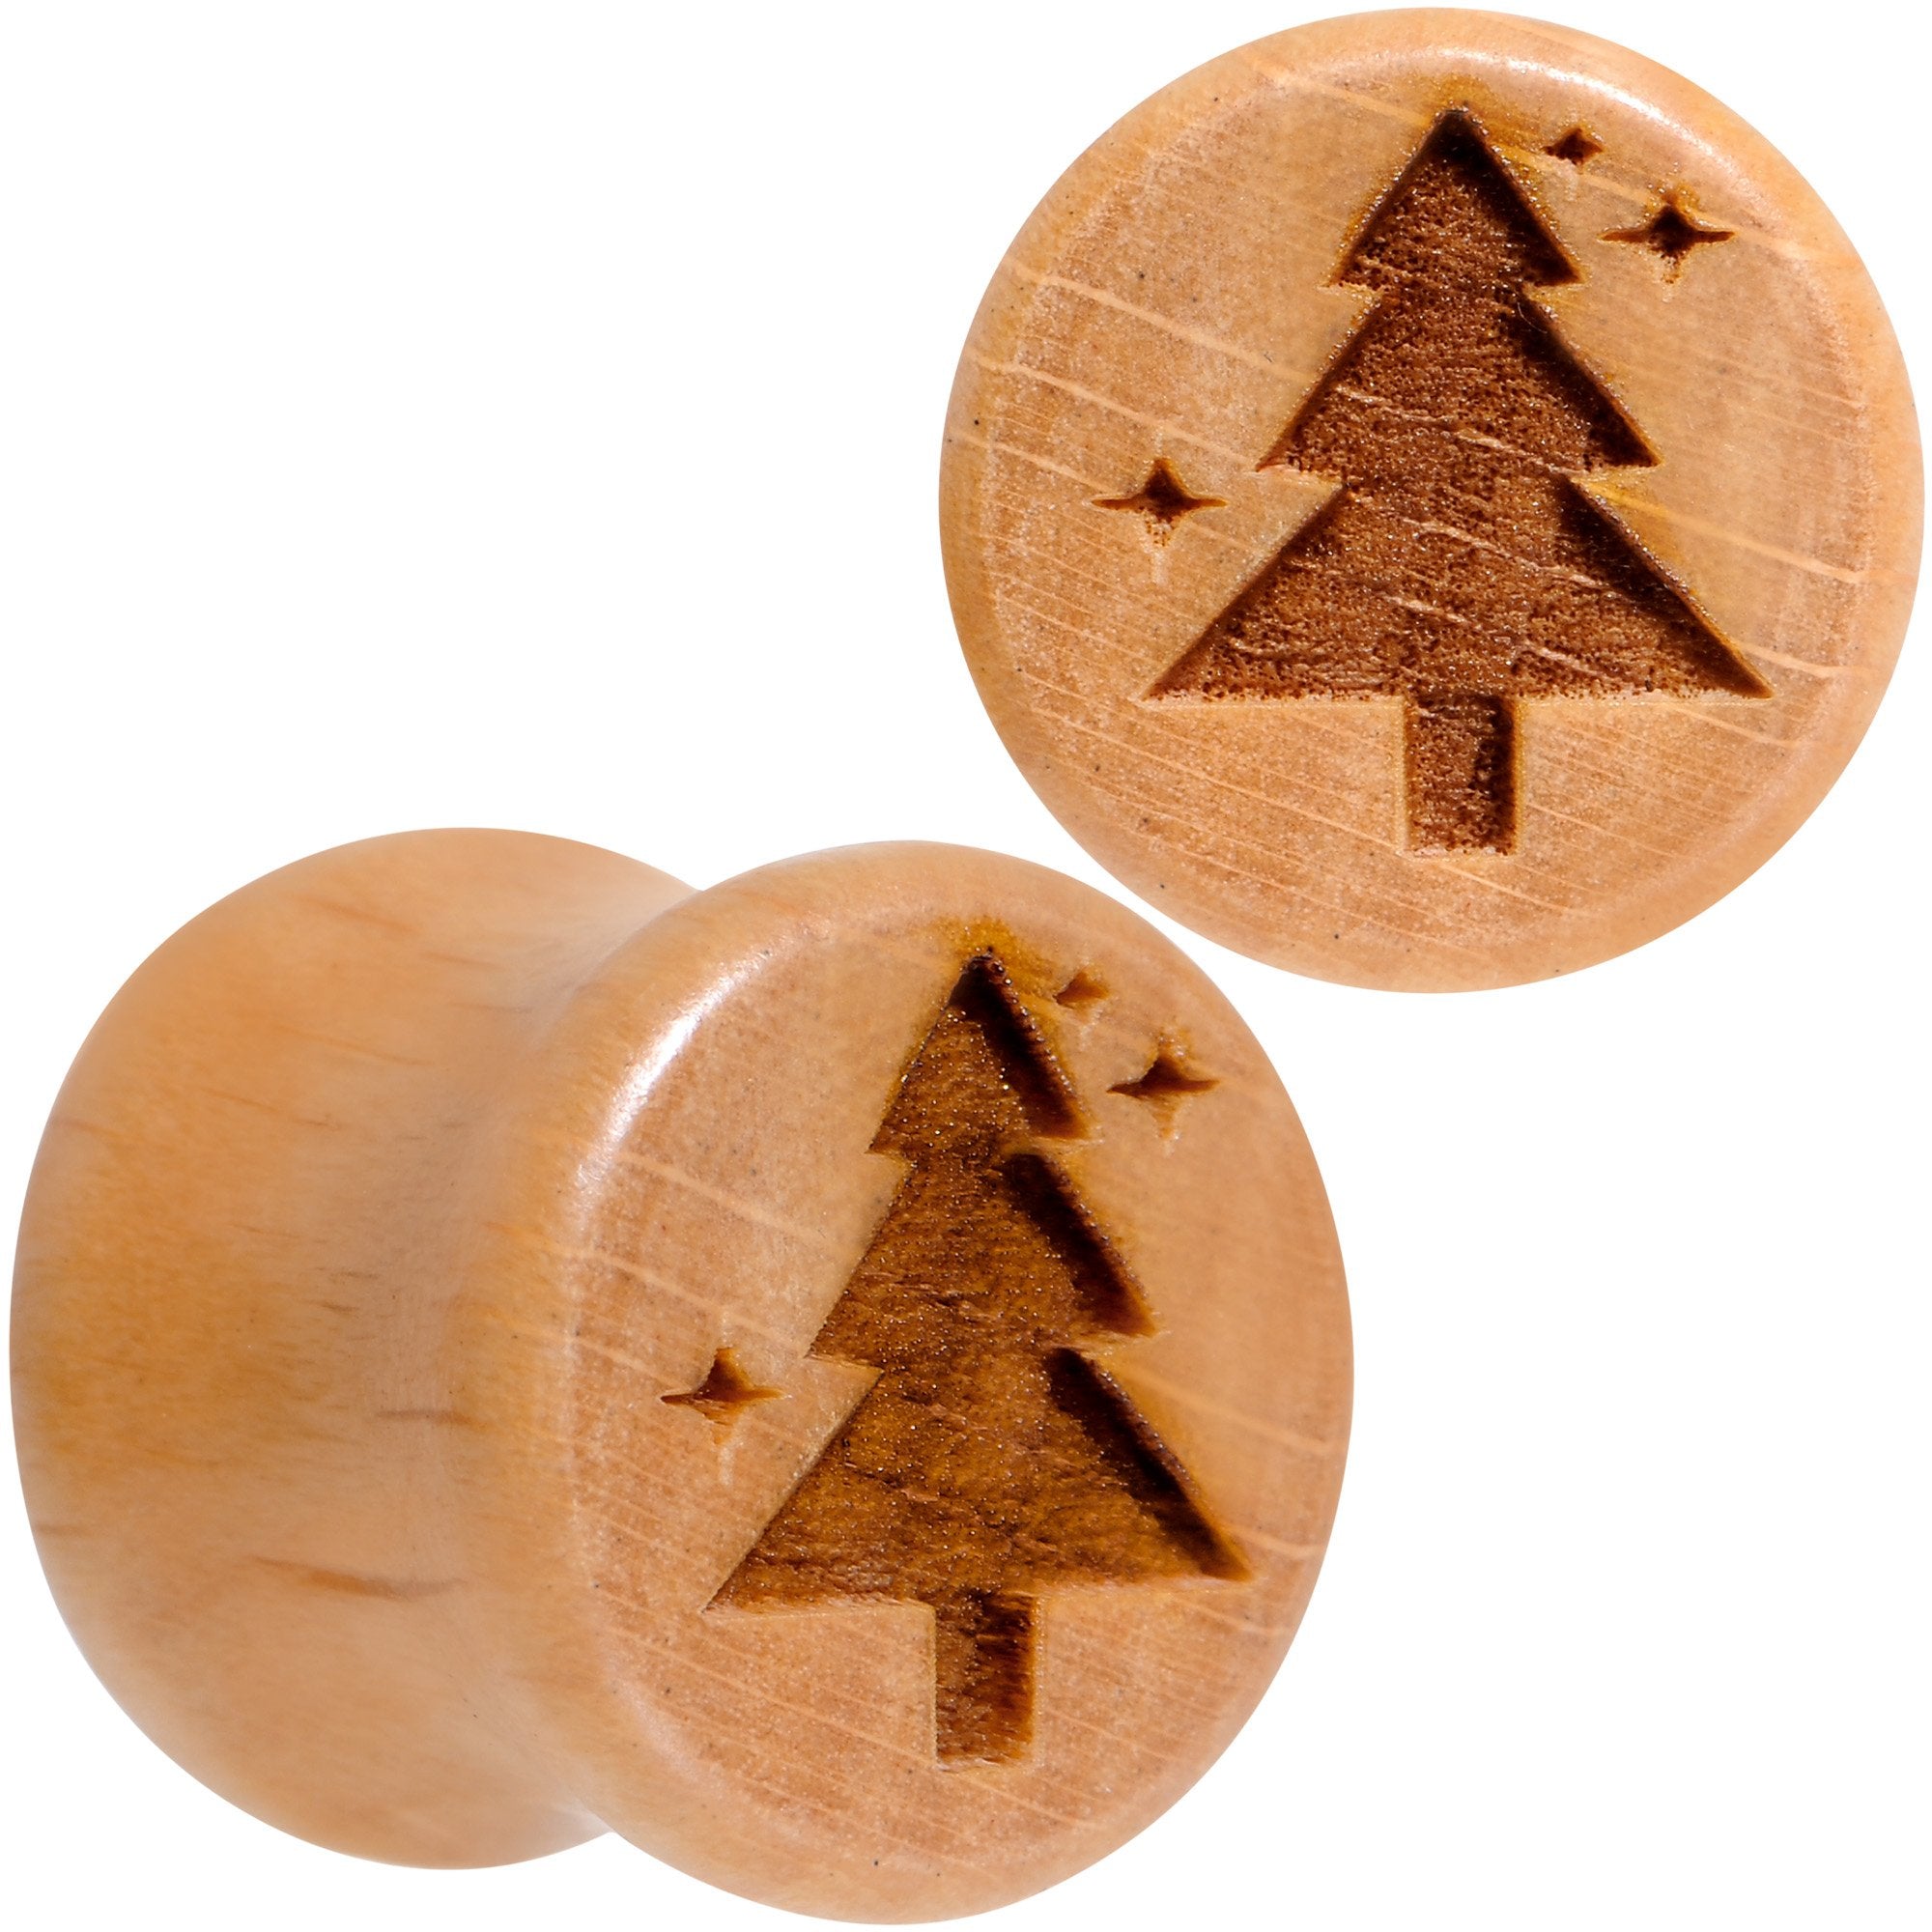 Organic Beechwood Christmas Tree Saddle Plug Set Sizes 8mm to 25mm